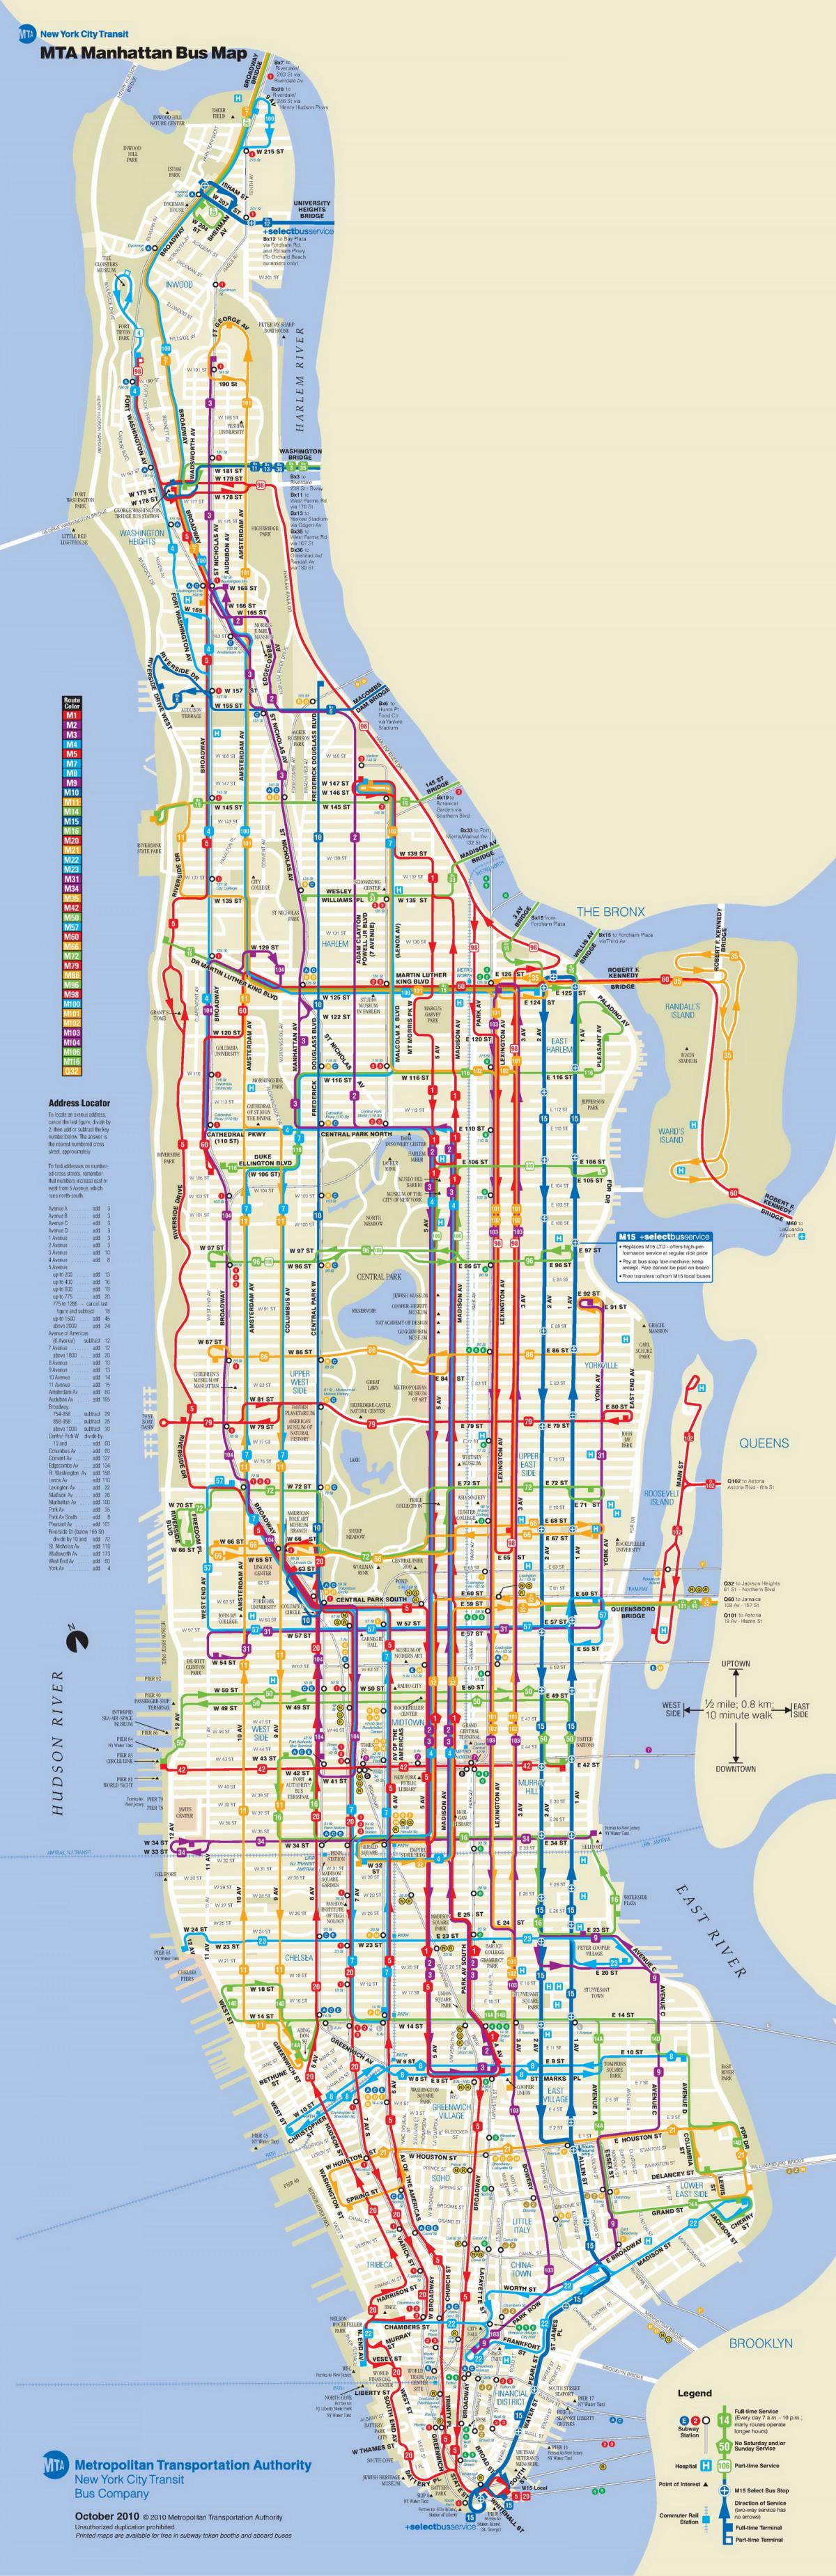 Њујорк аутобус карта Менхетна